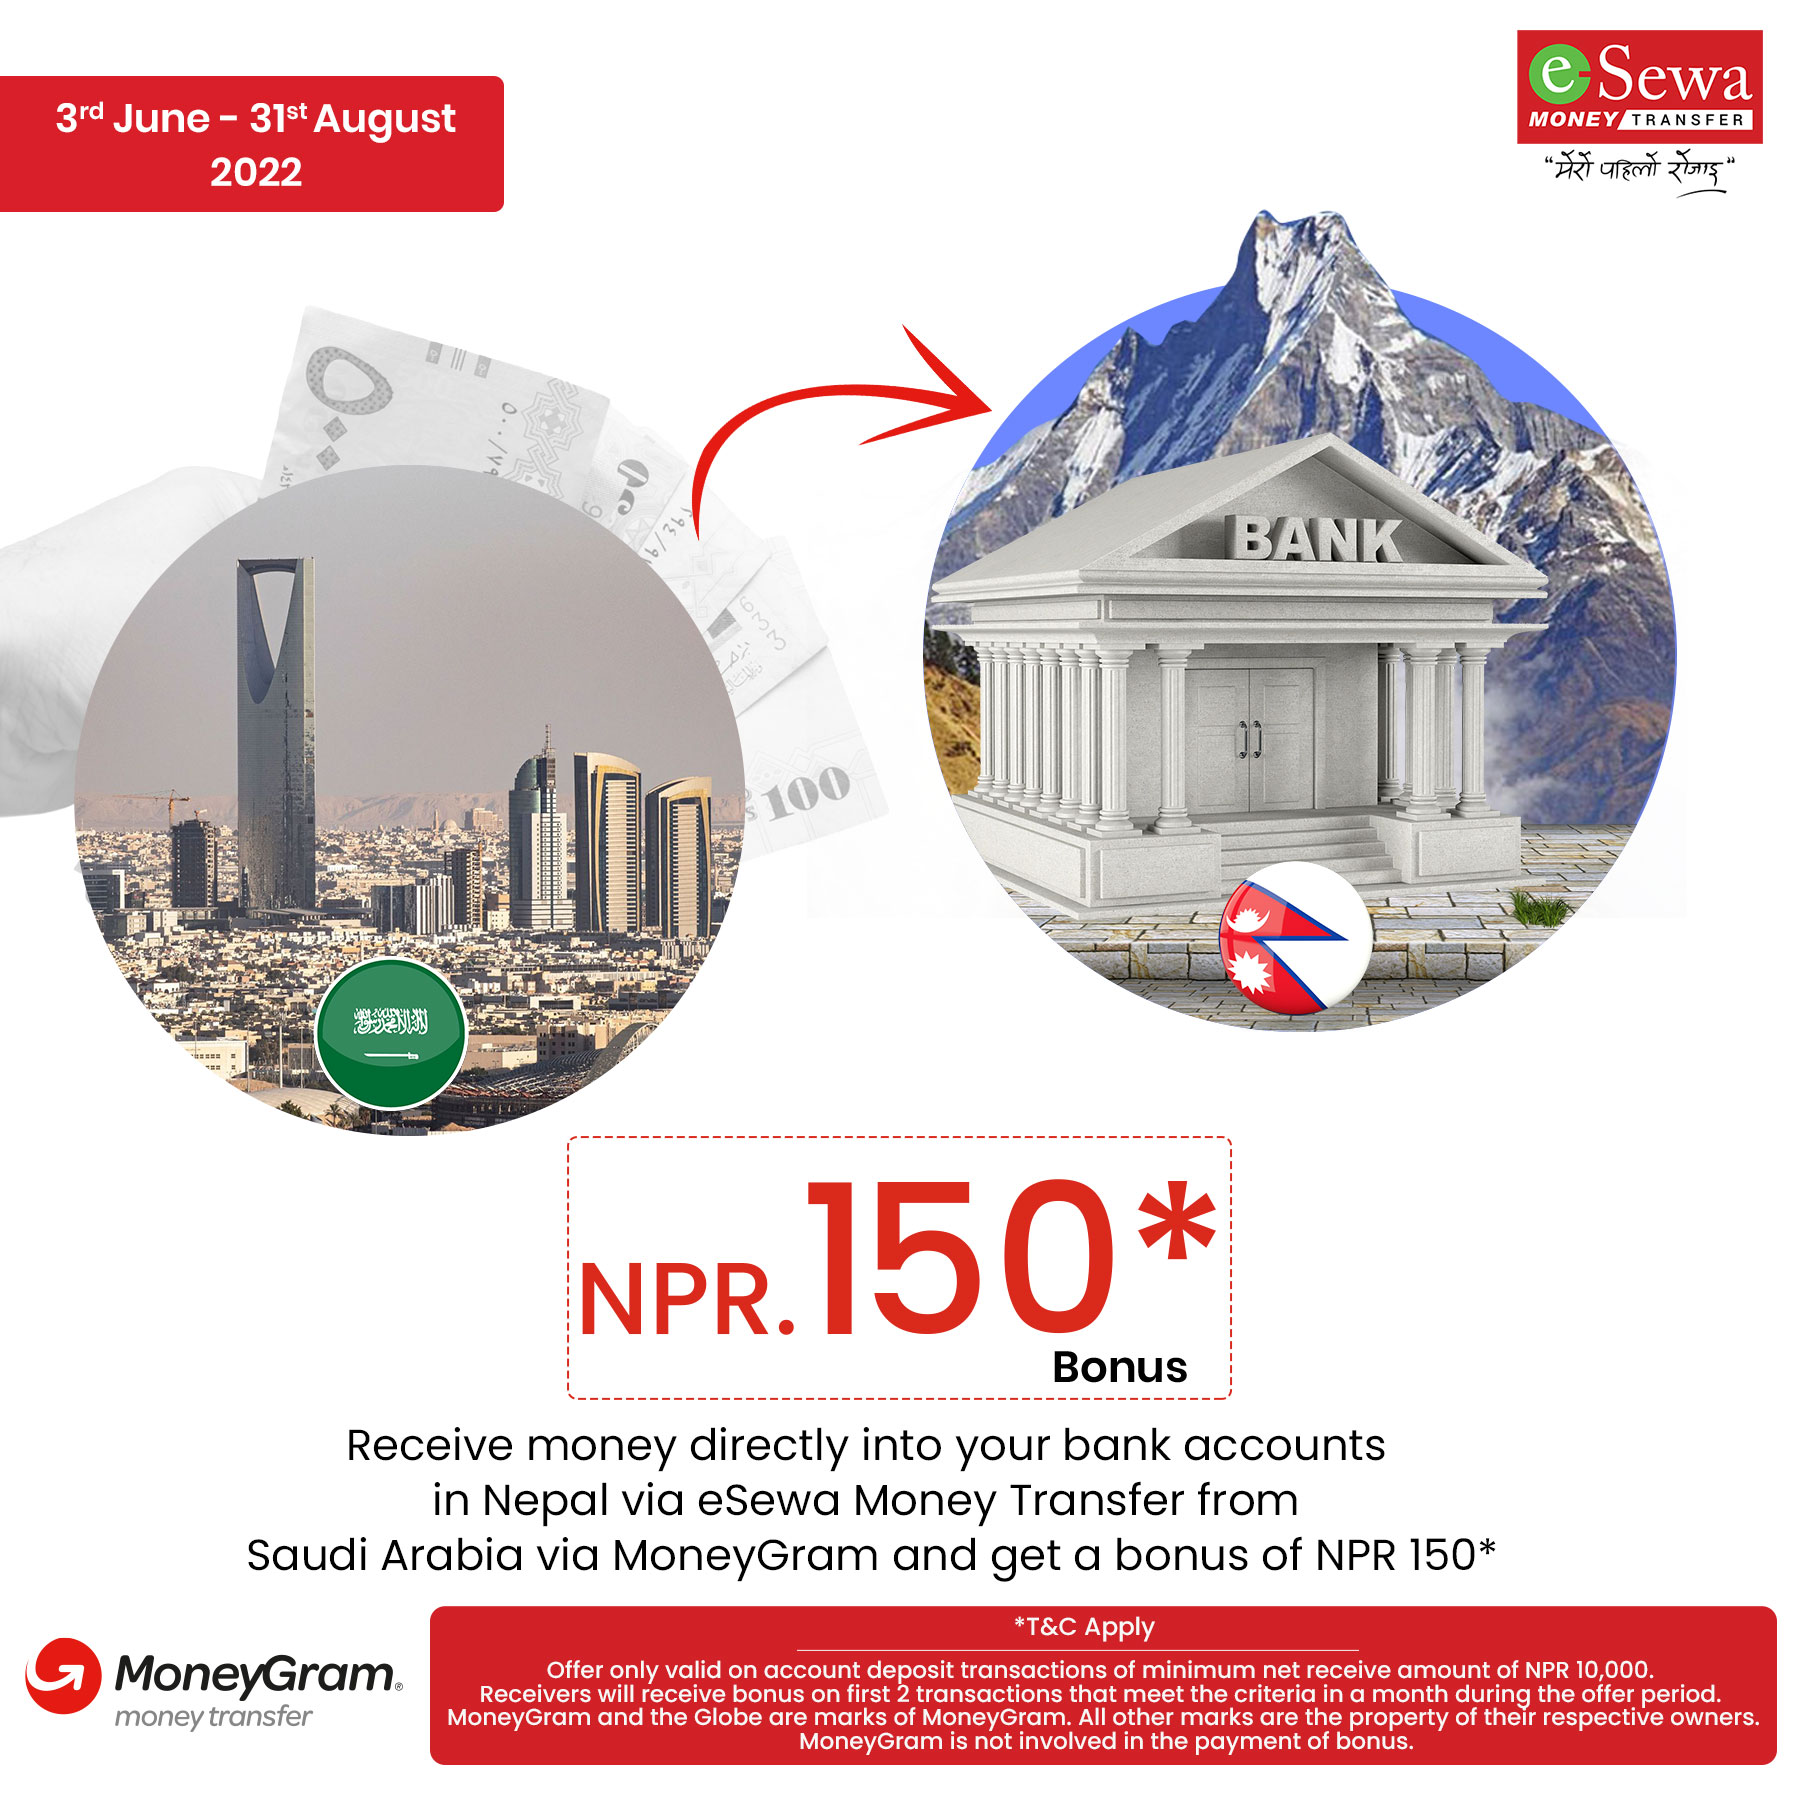 MoneyGram NPR. 150 bonus campaign from Saudi Arabia - Featured Image